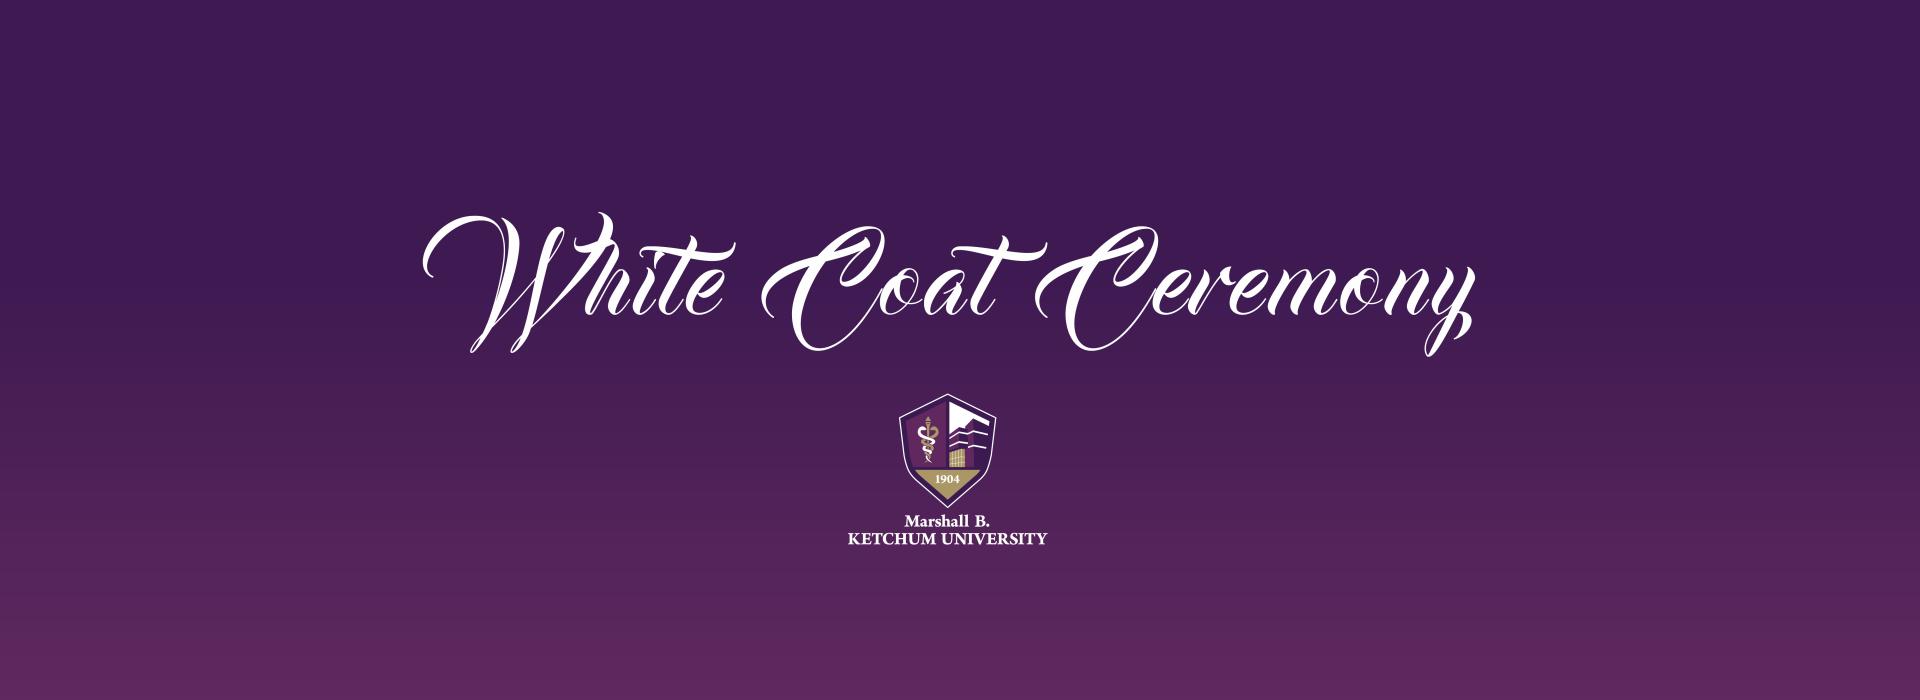 MBKU White Coat Ceremonies